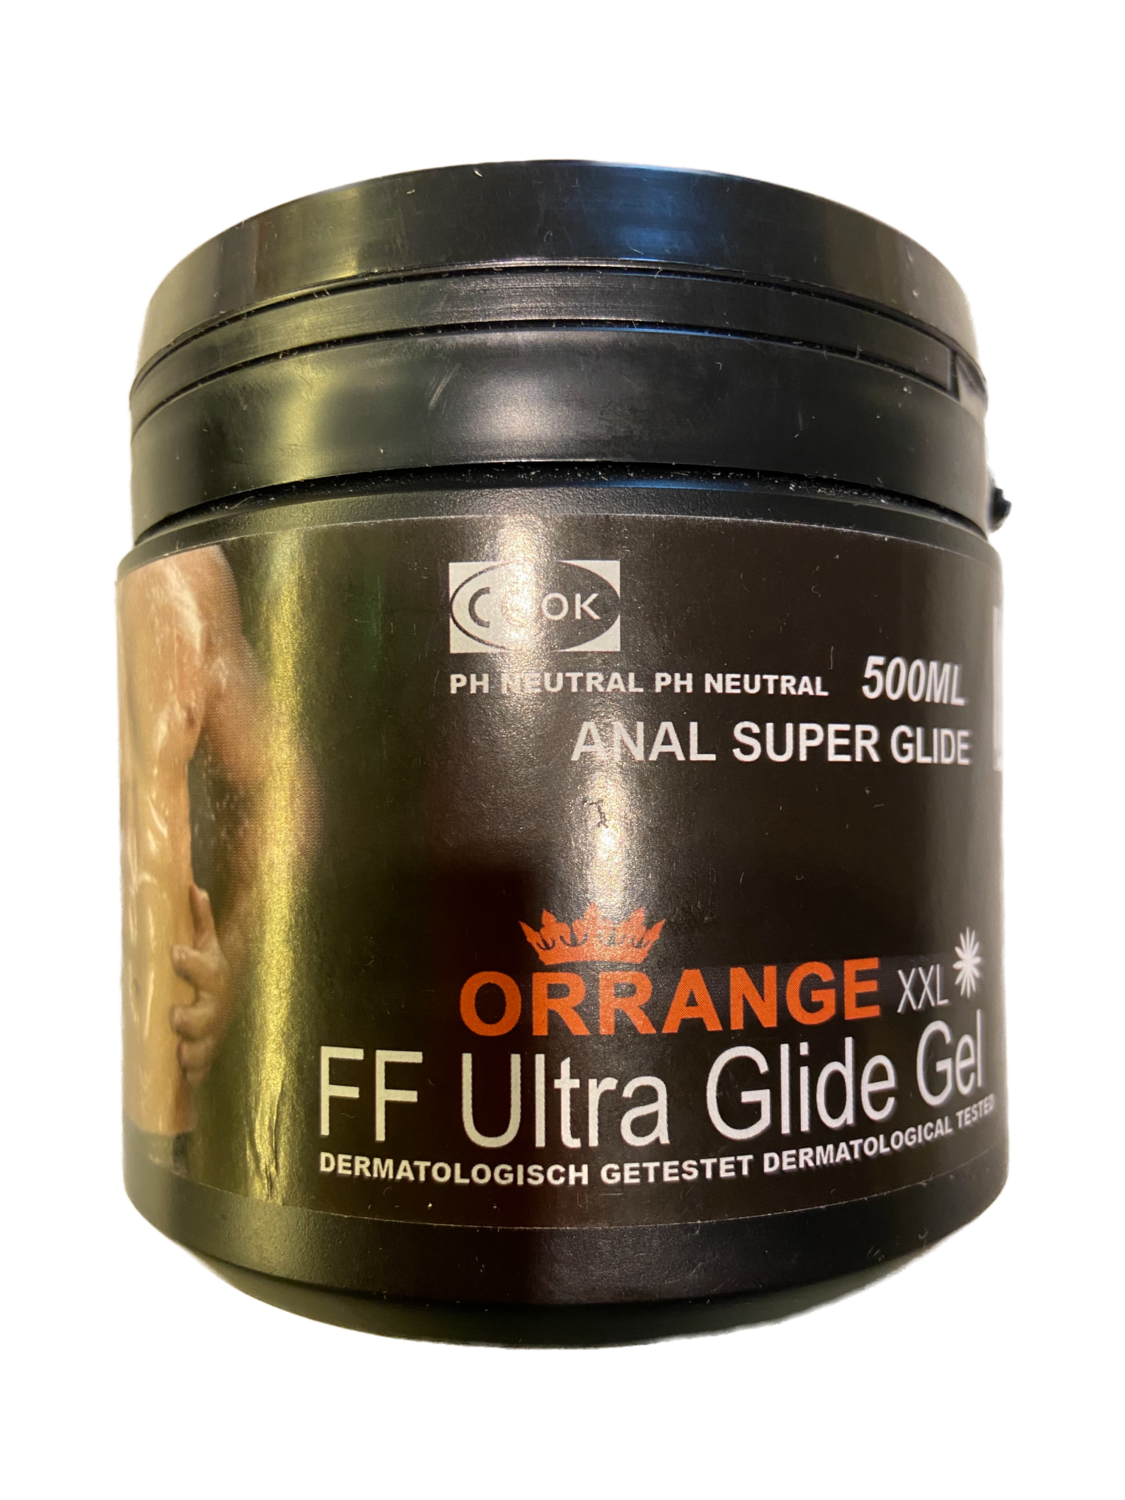 FF-Ultra Glide-Gel